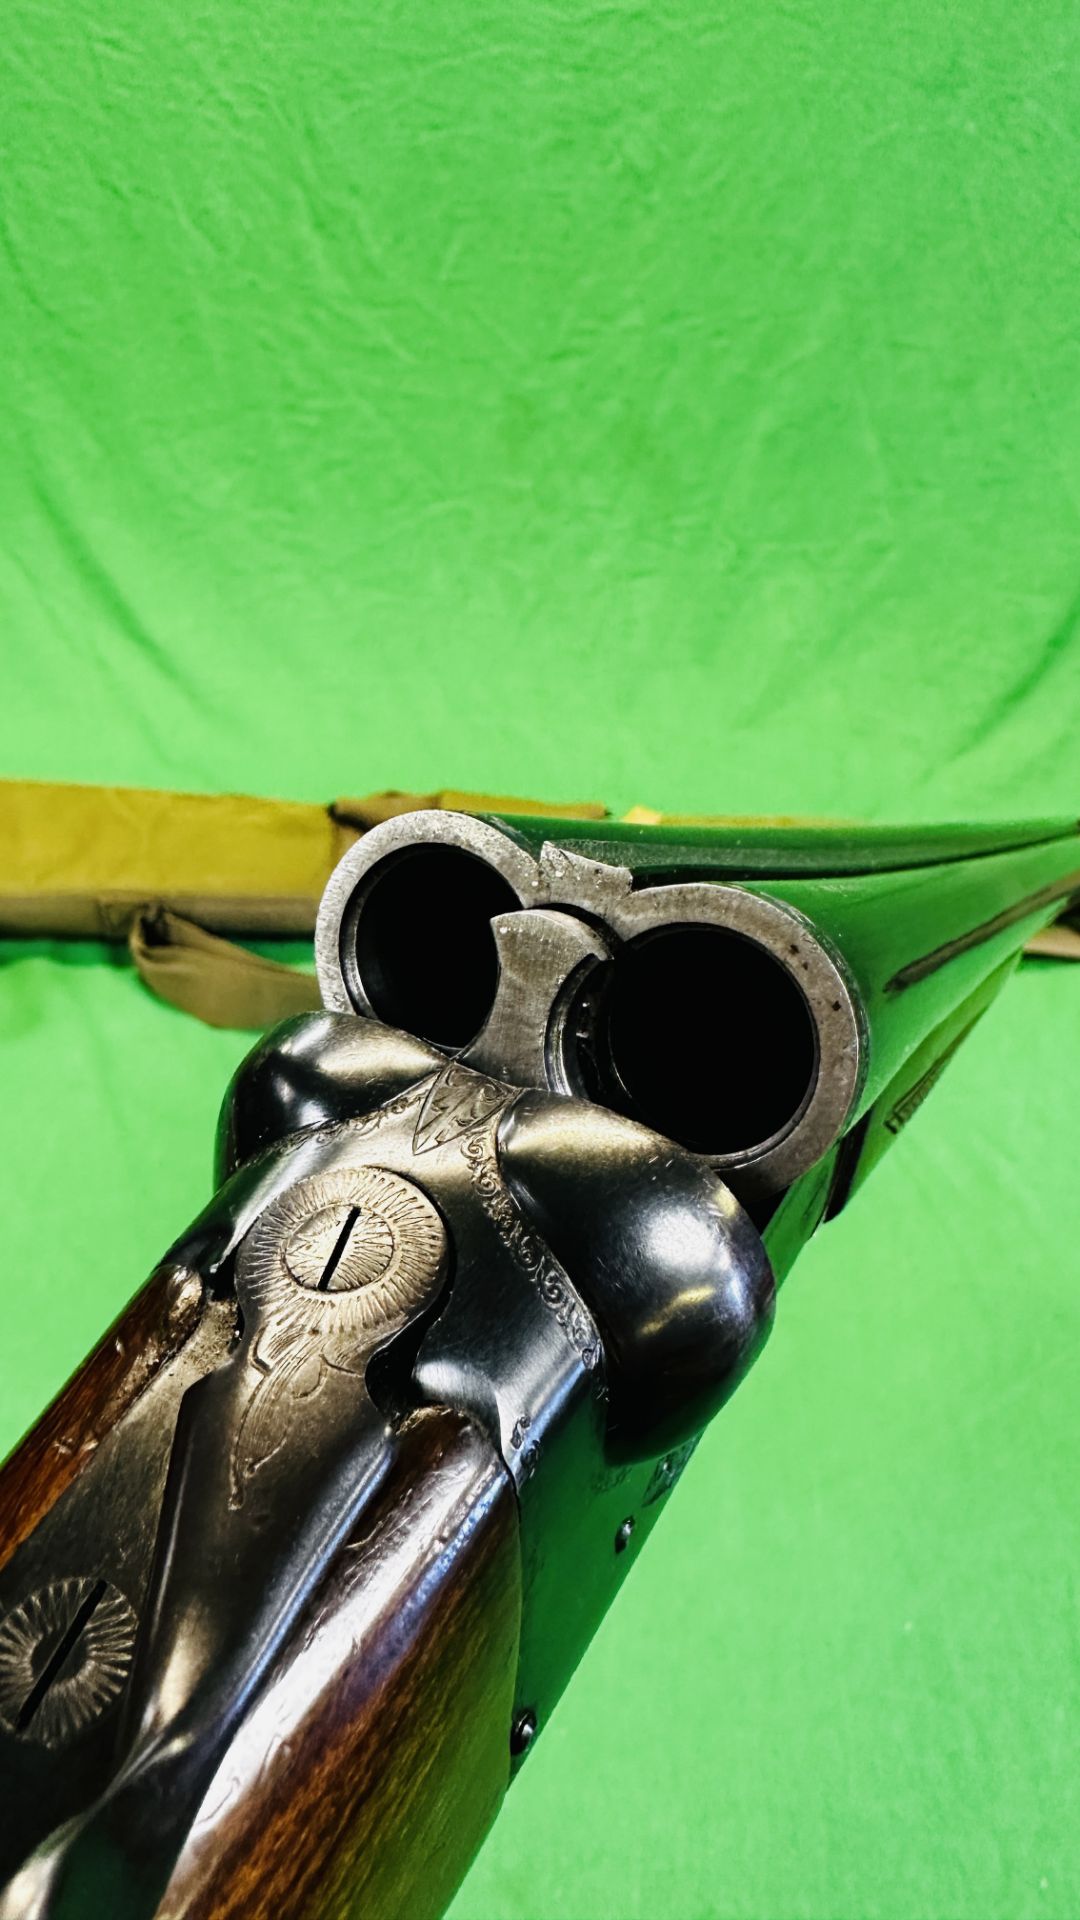 ZABALA 12 GAUGE SIDE BY SIDE SHOTGUN #192092 WITH GREEN PADDED GUN SLEEVE - (REF: 1452) - (ALL GUNS - Image 6 of 16